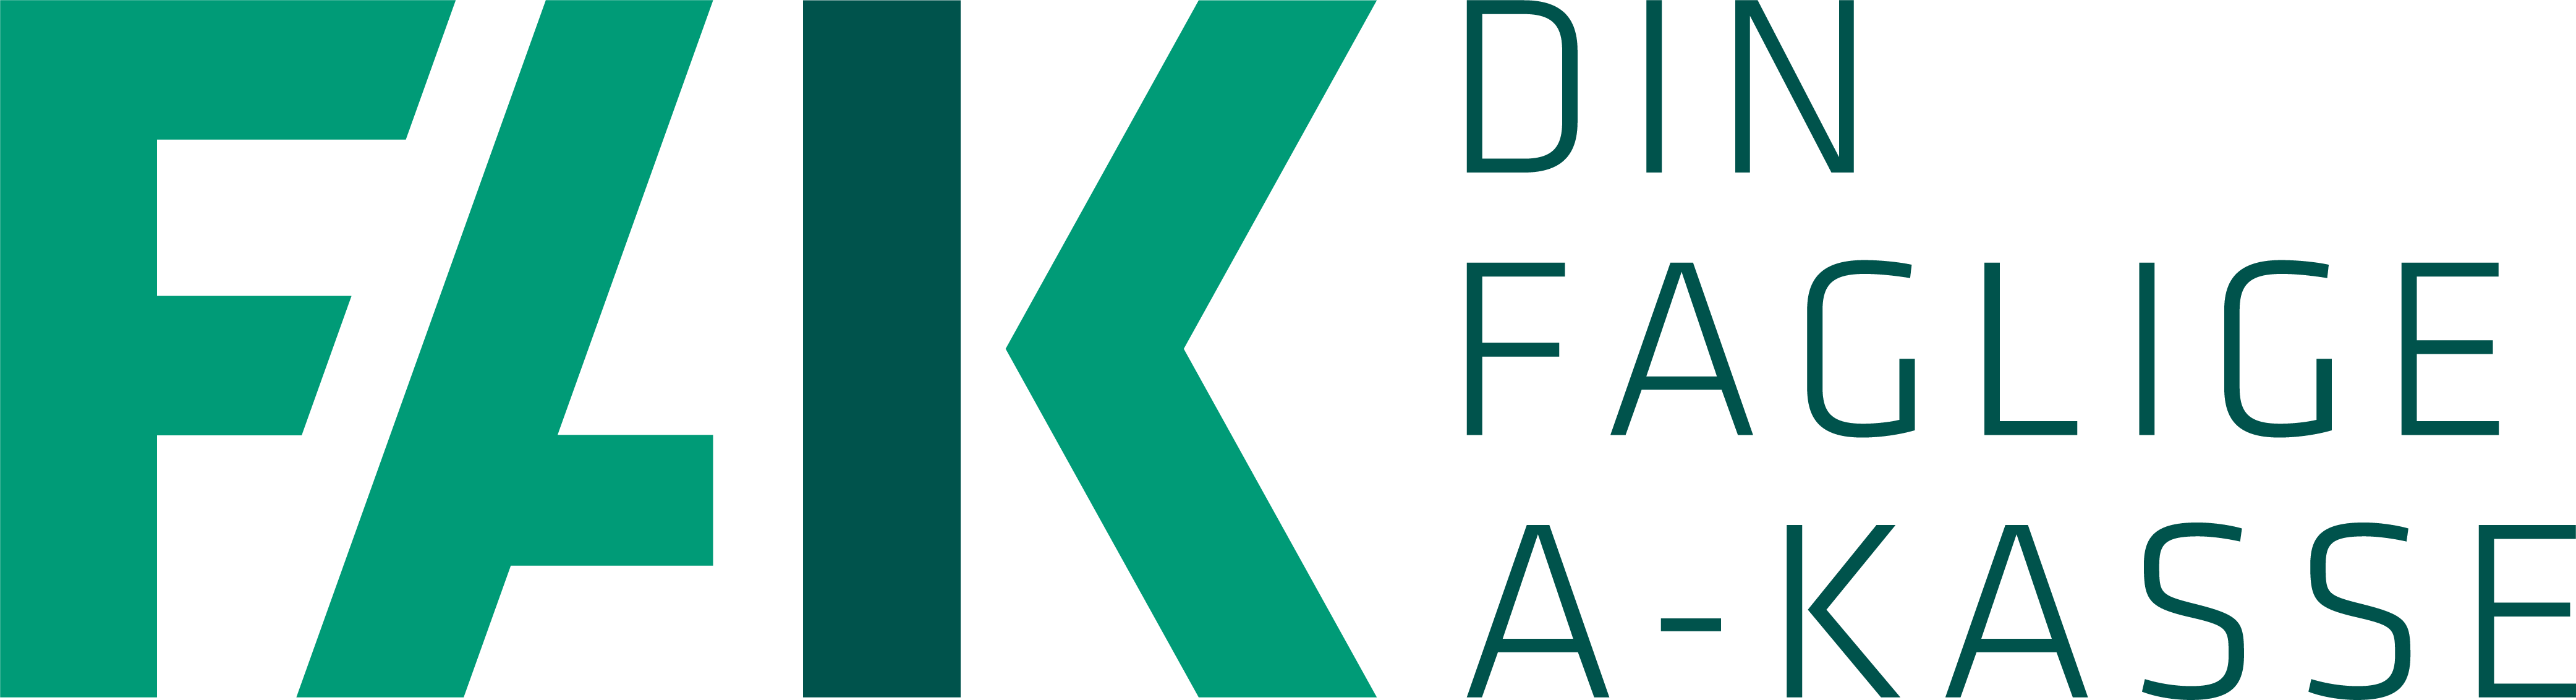 fak logo 2